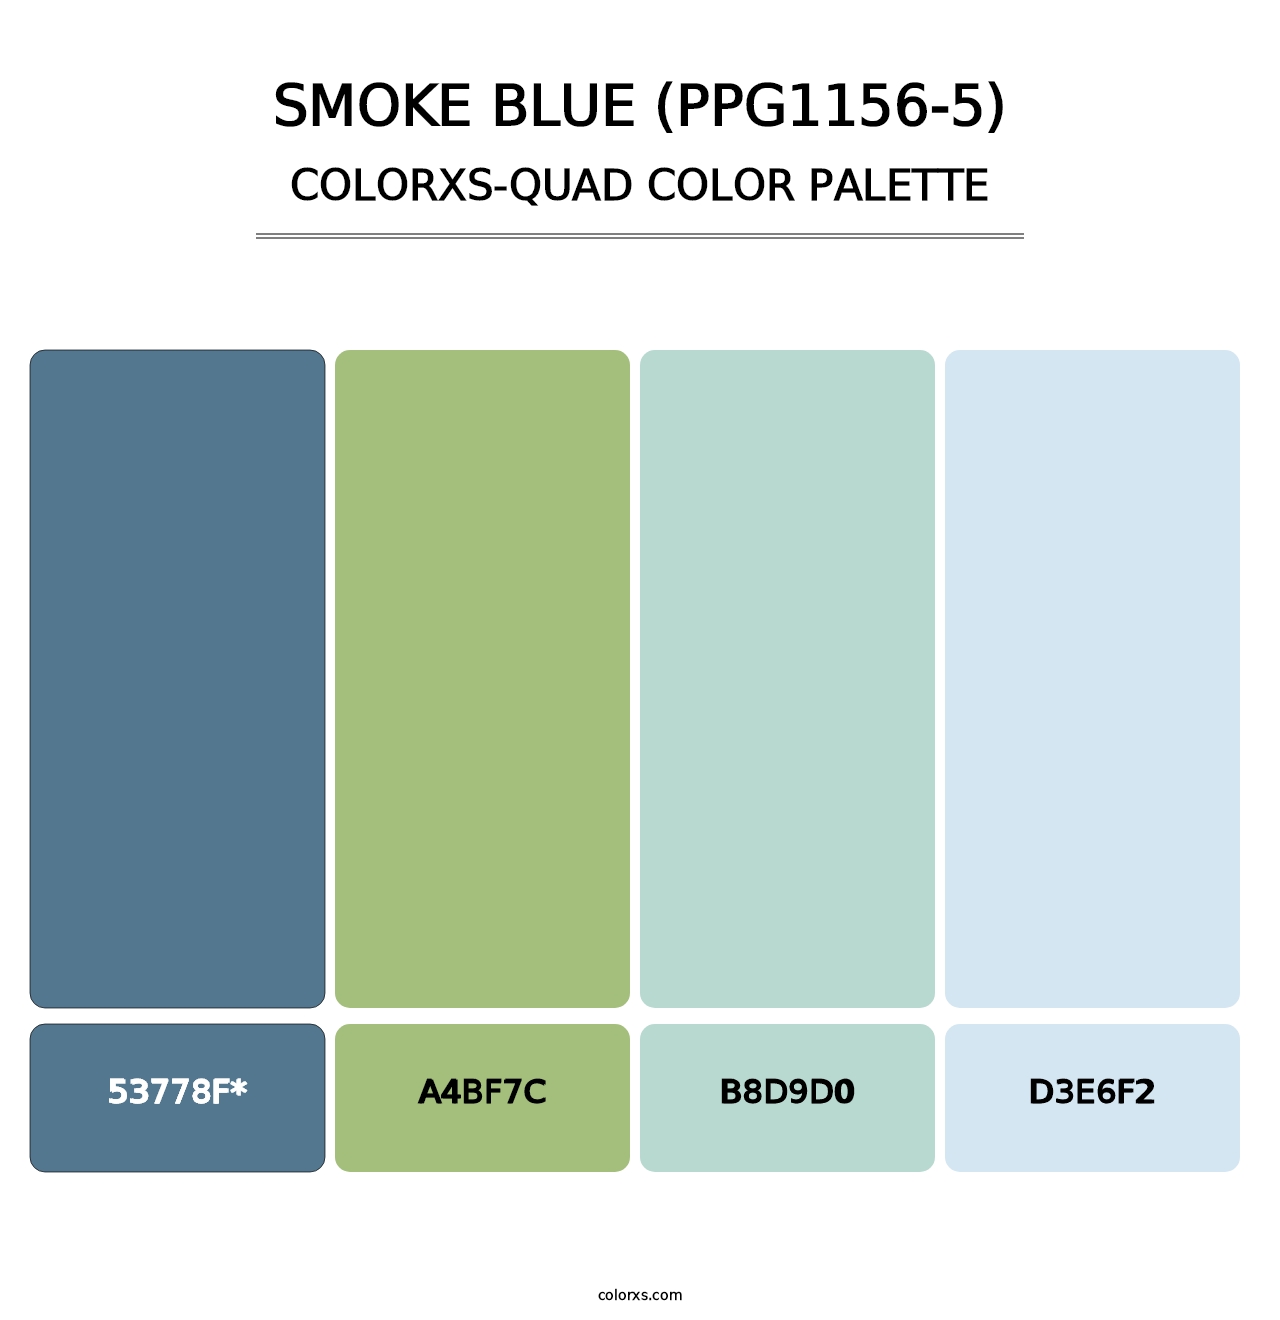 Smoke Blue (PPG1156-5) - Colorxs Quad Palette